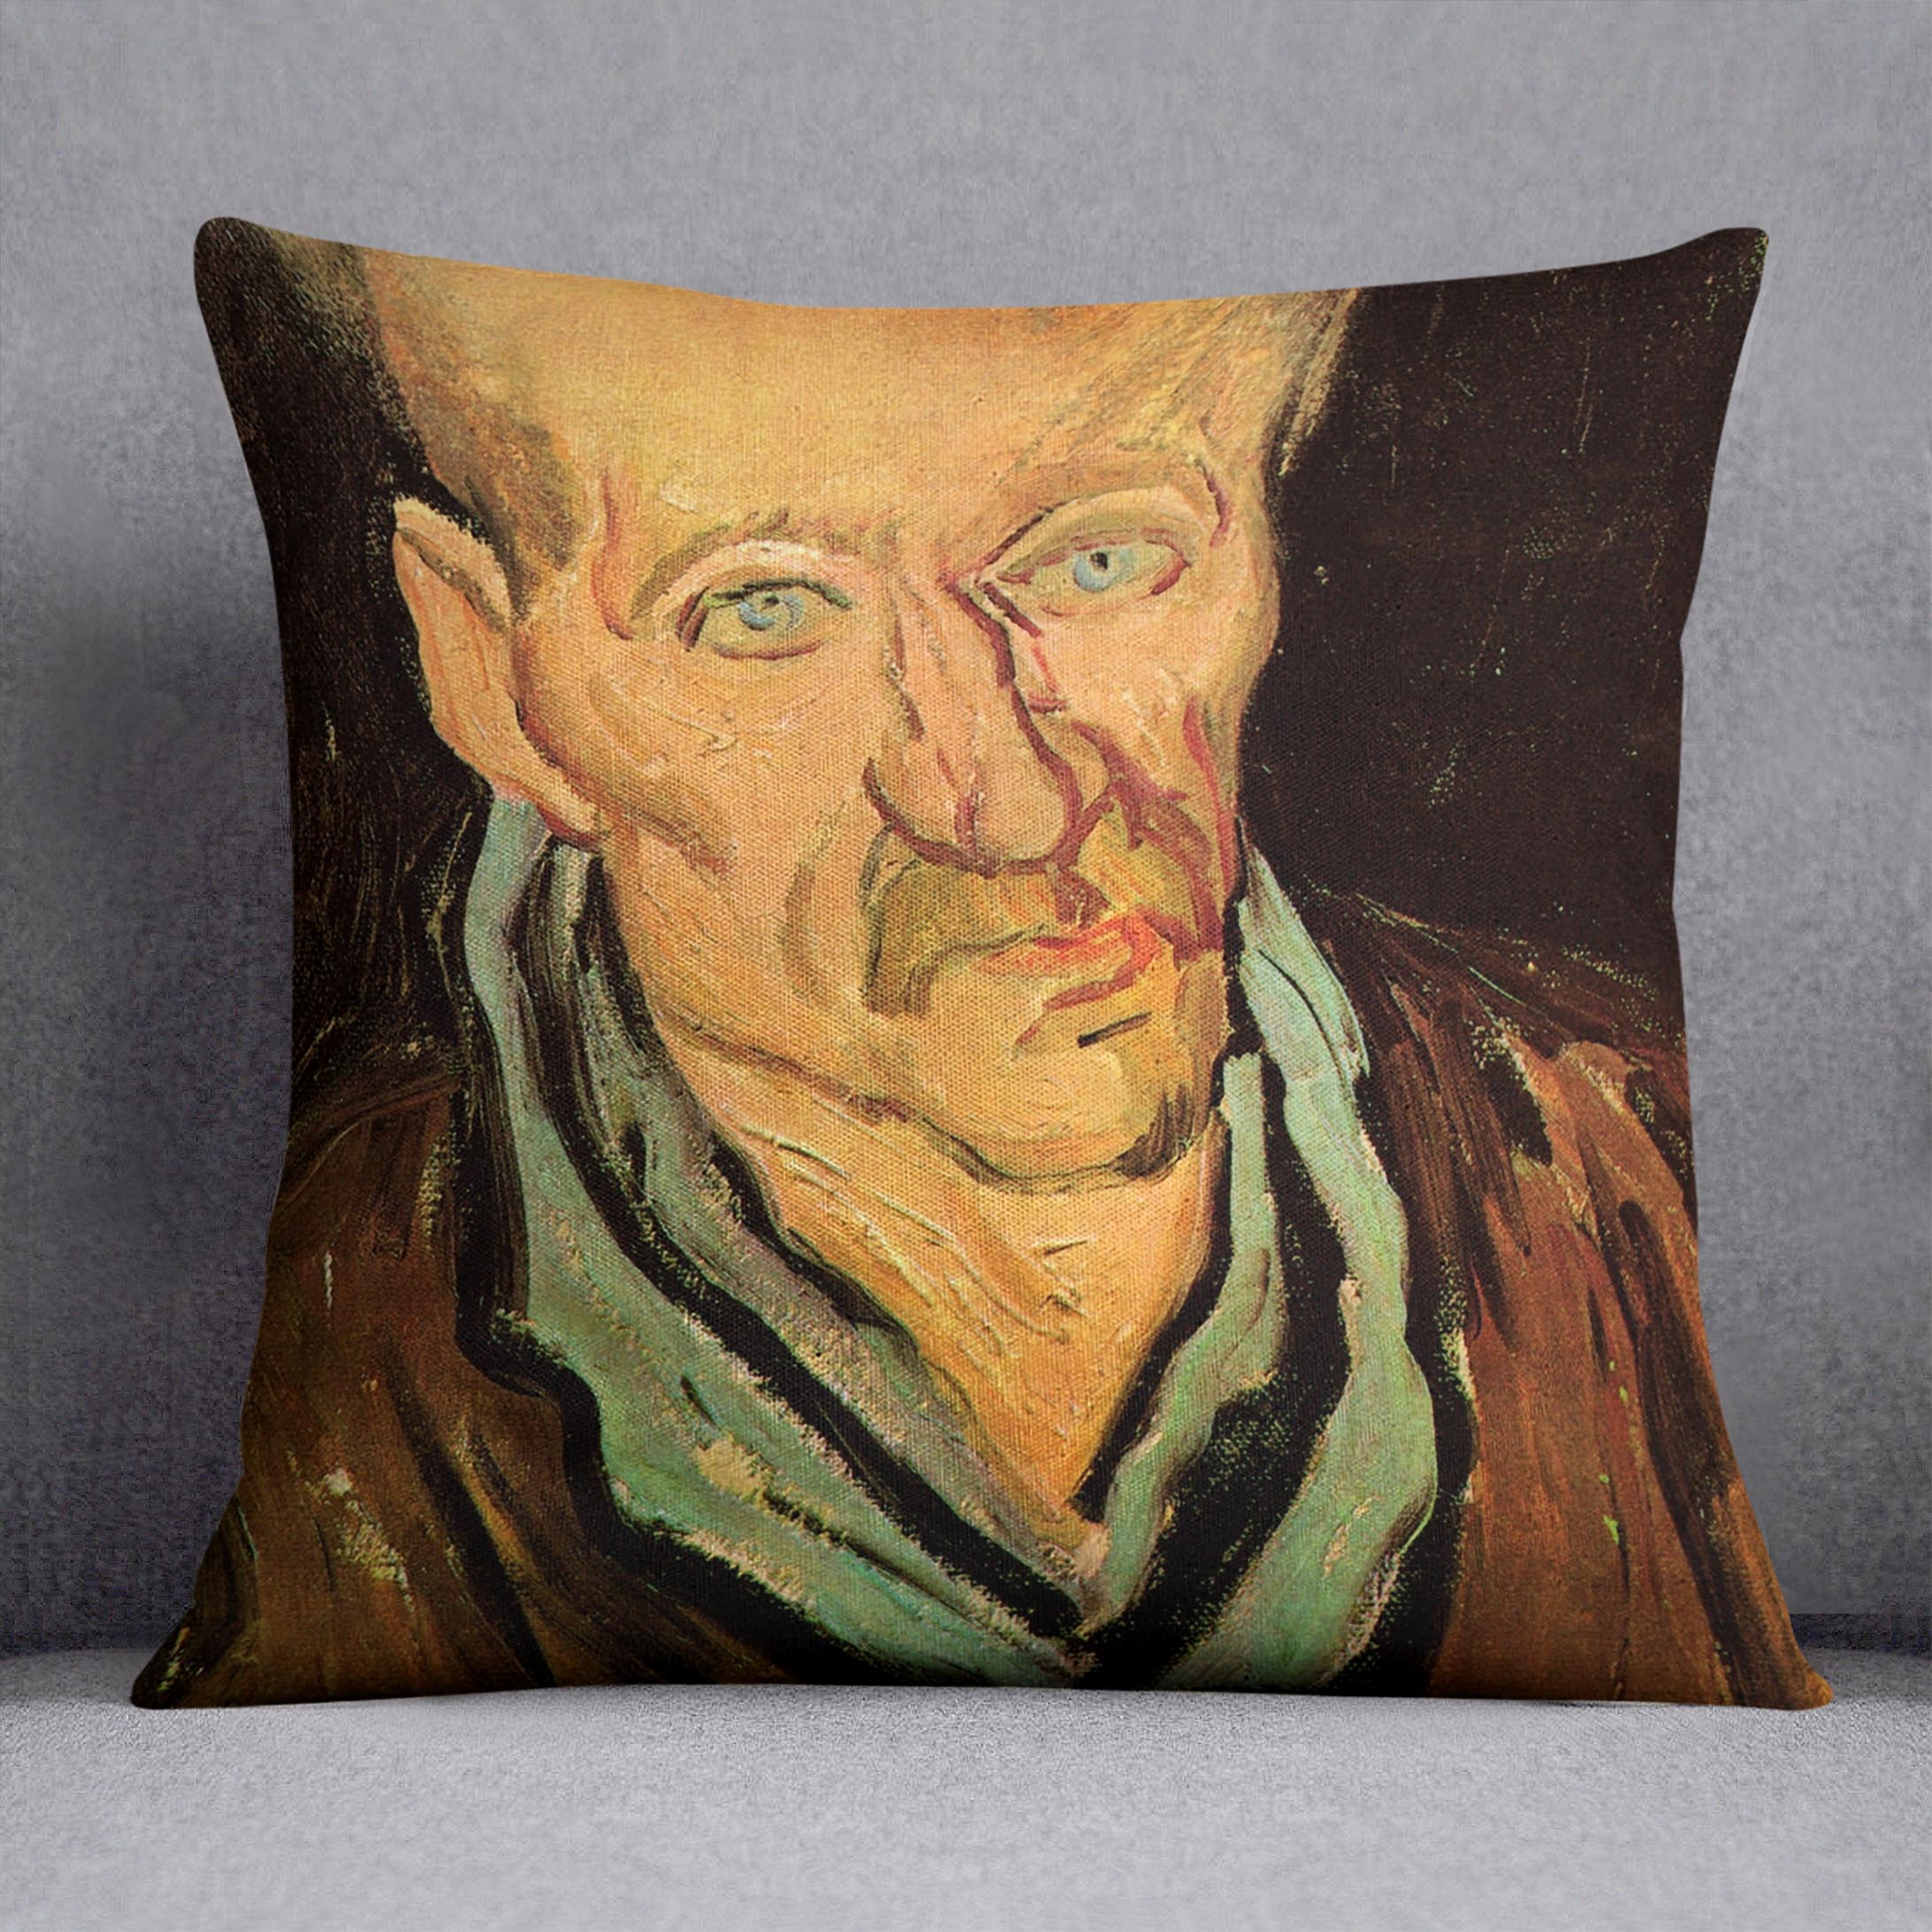 Portrait of a Patient in Saint-Paul Hospital by Van Gogh Cushion